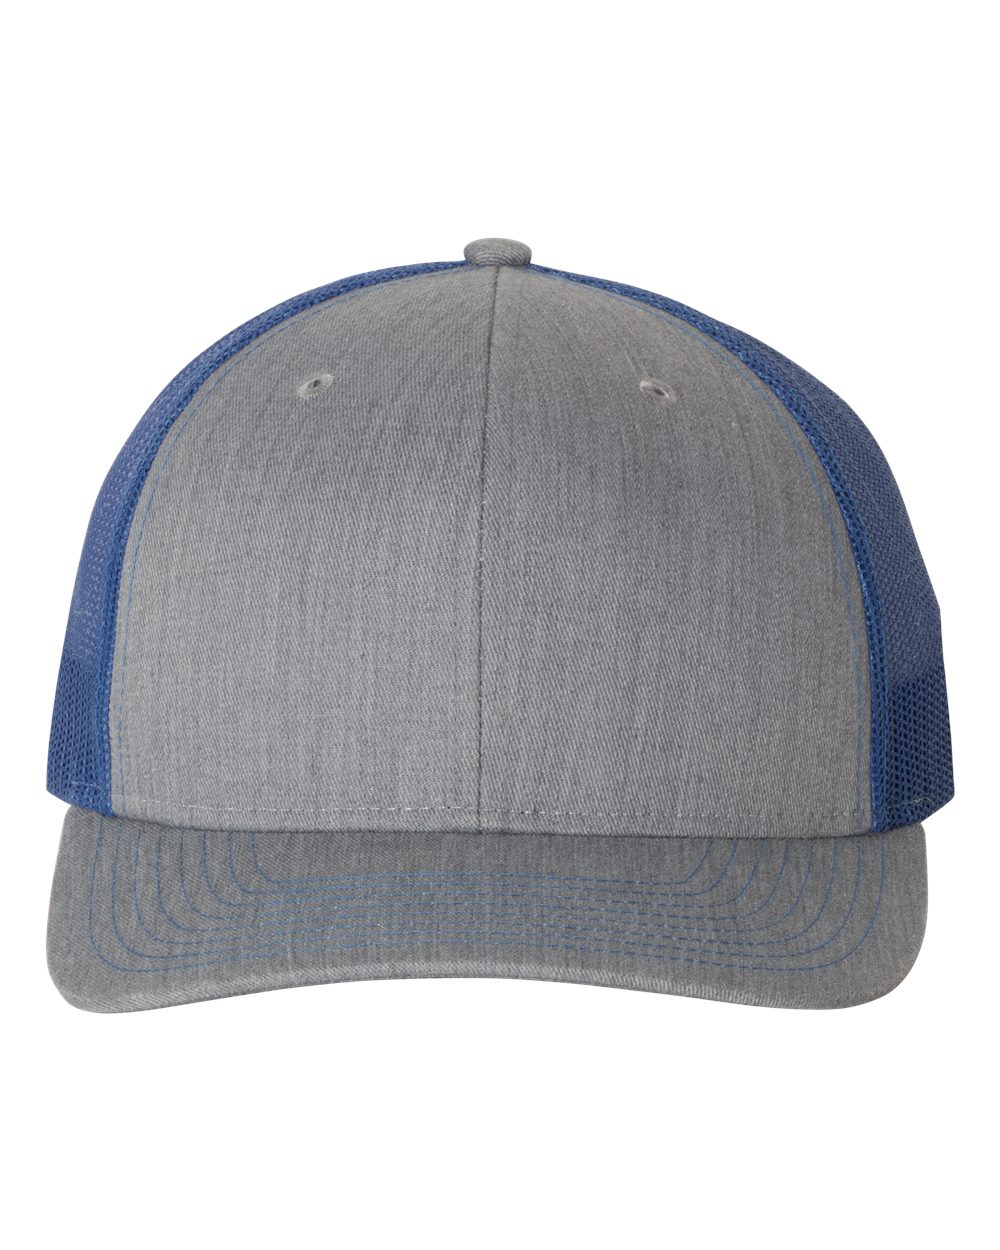 Richardson Snapback Trucker Hat (112) in Heather Grey/Royal